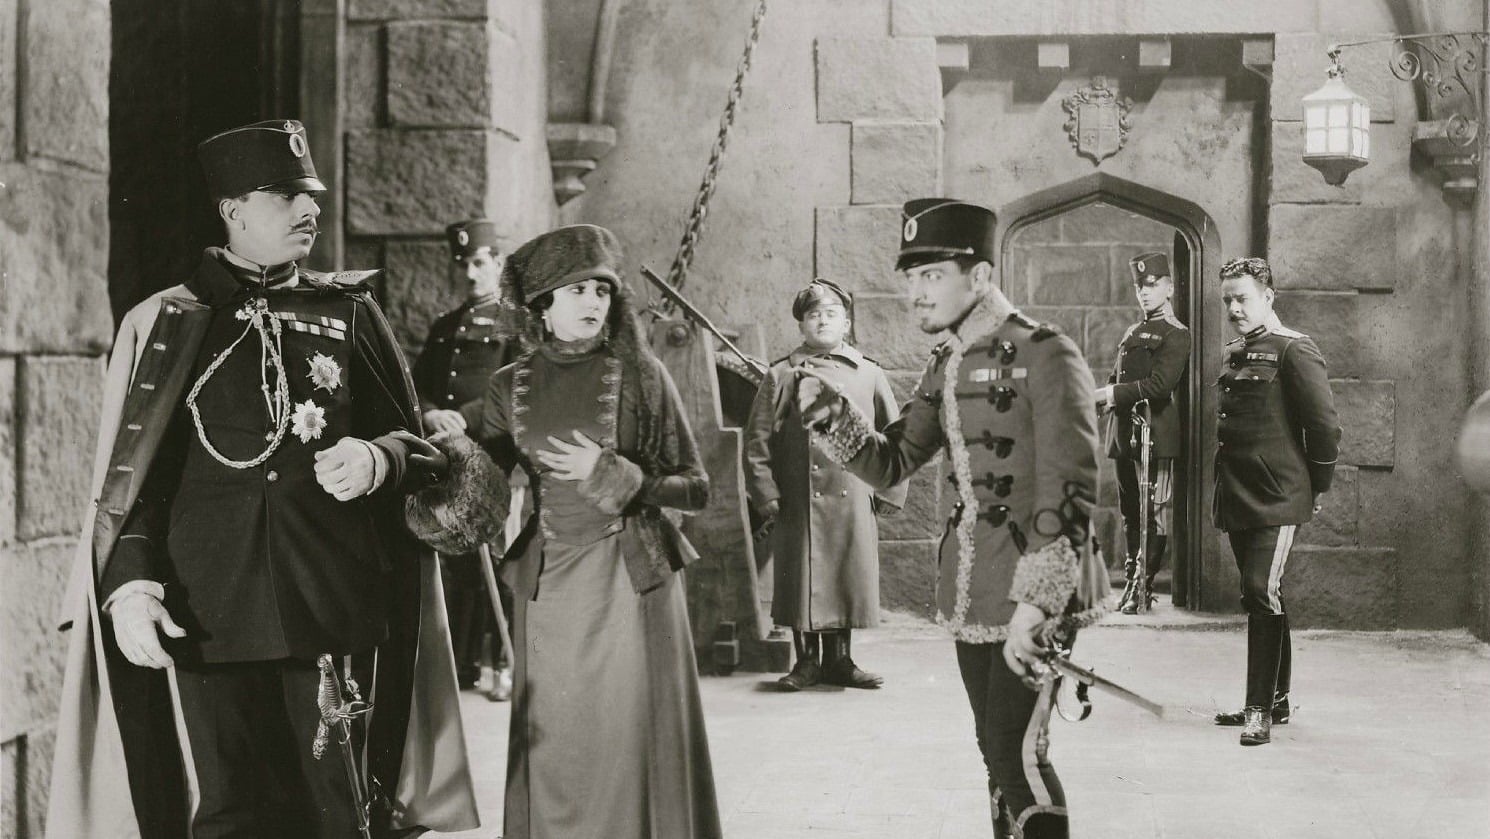 The Prisoner of Zenda (1922)